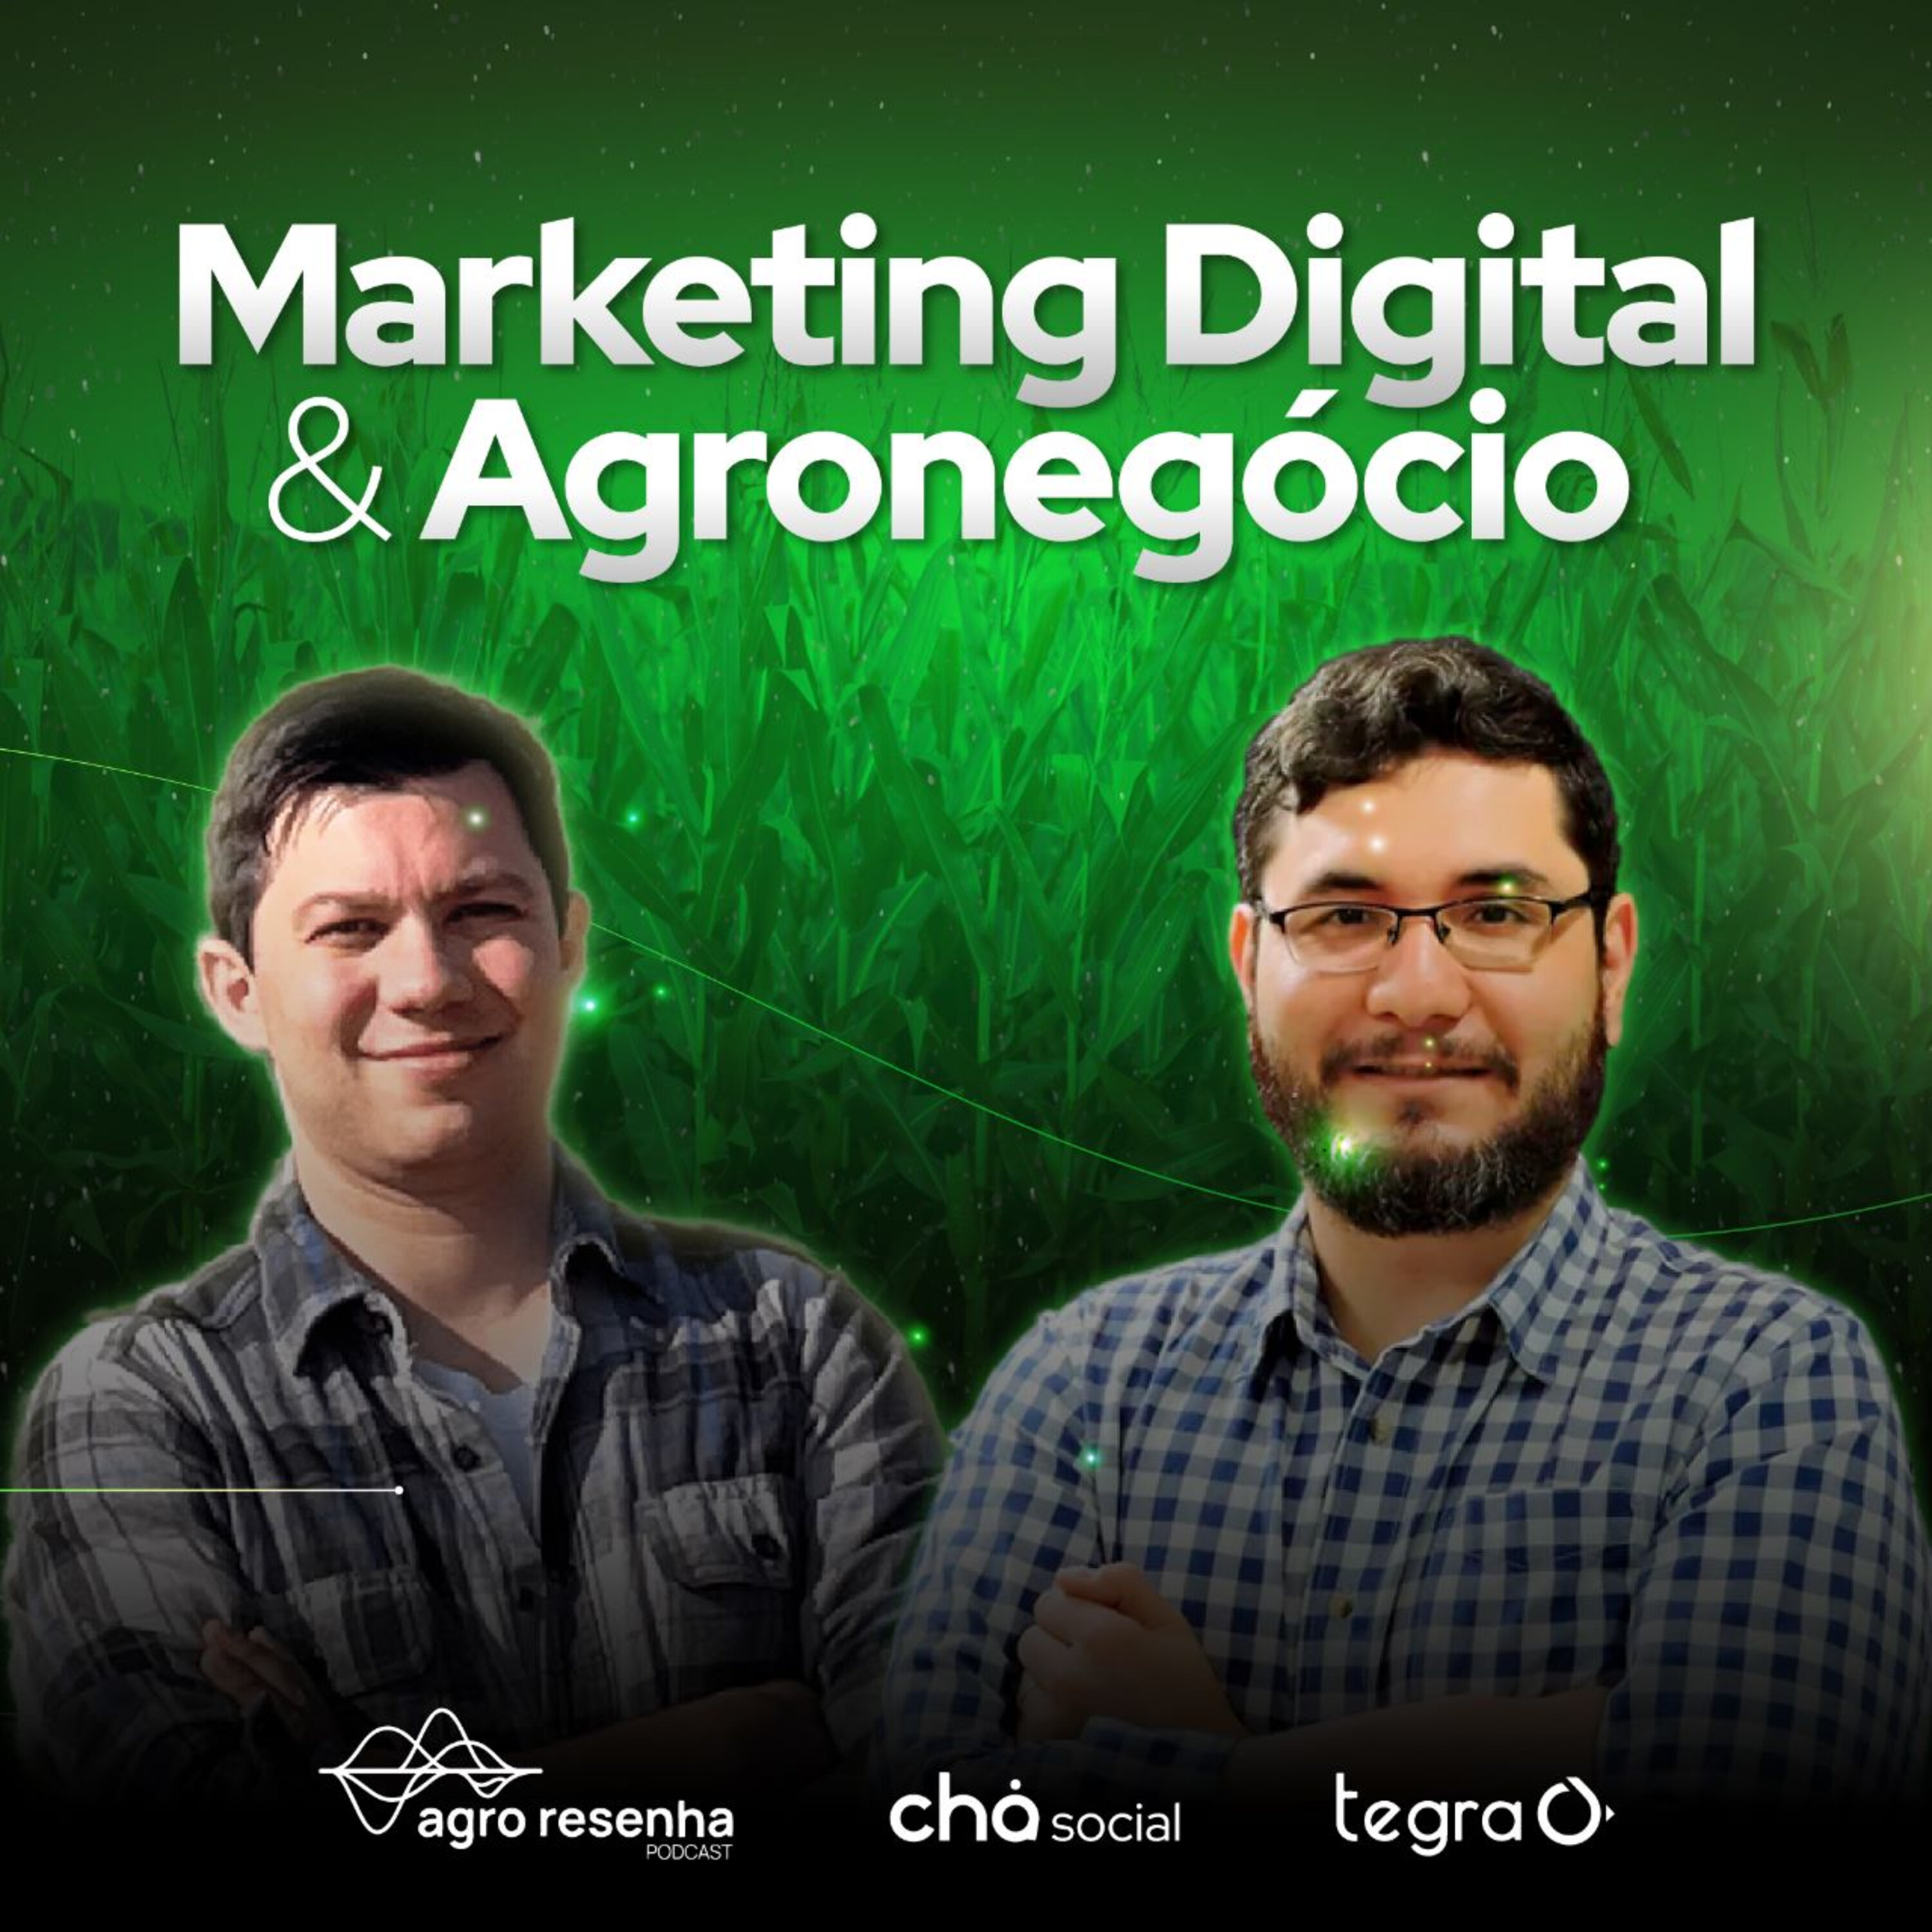 Agronegócio, marketing digital, podcasts e Leadcultura